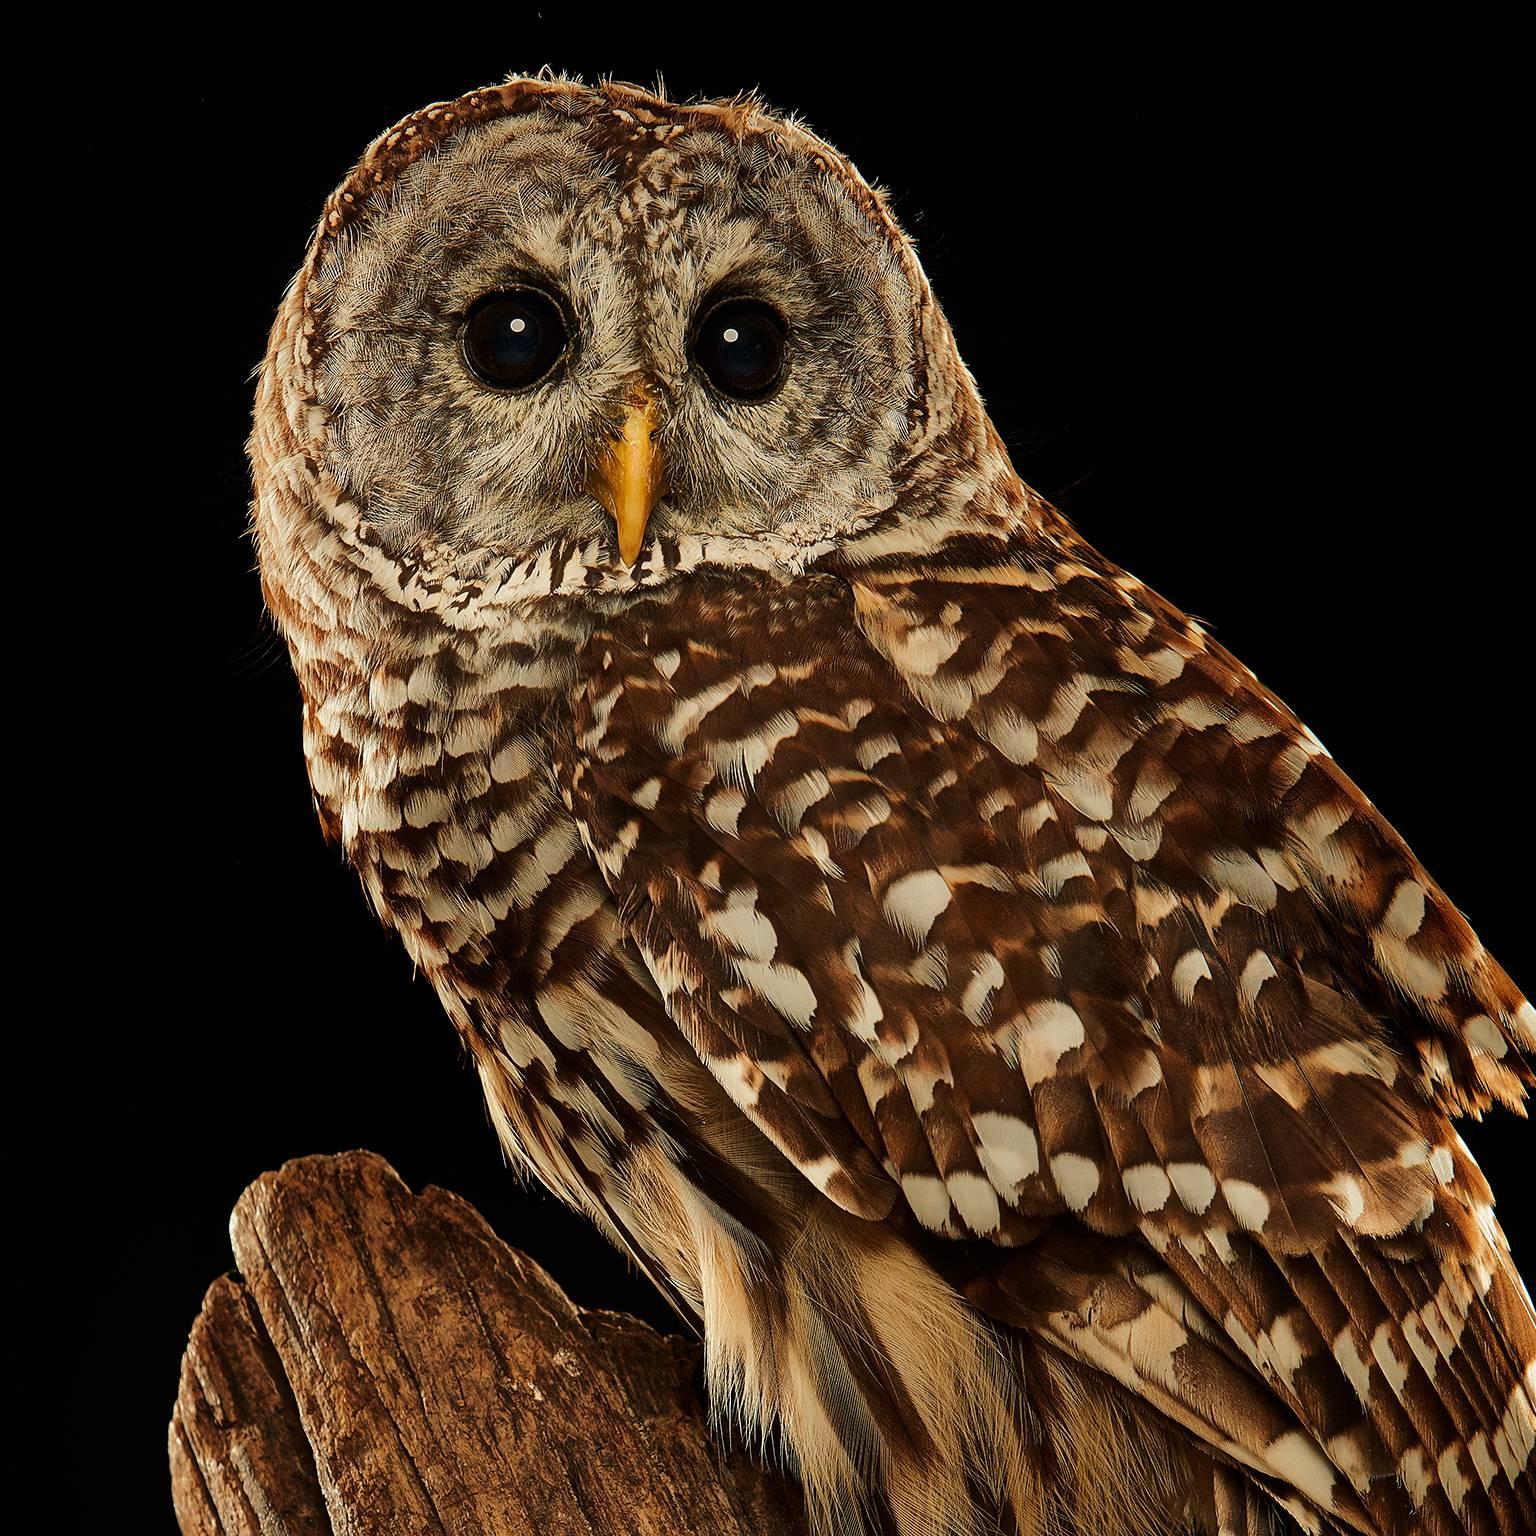 Birds of Prey - Barred Owl No. 10 - Photograph by Chris Gordaneer